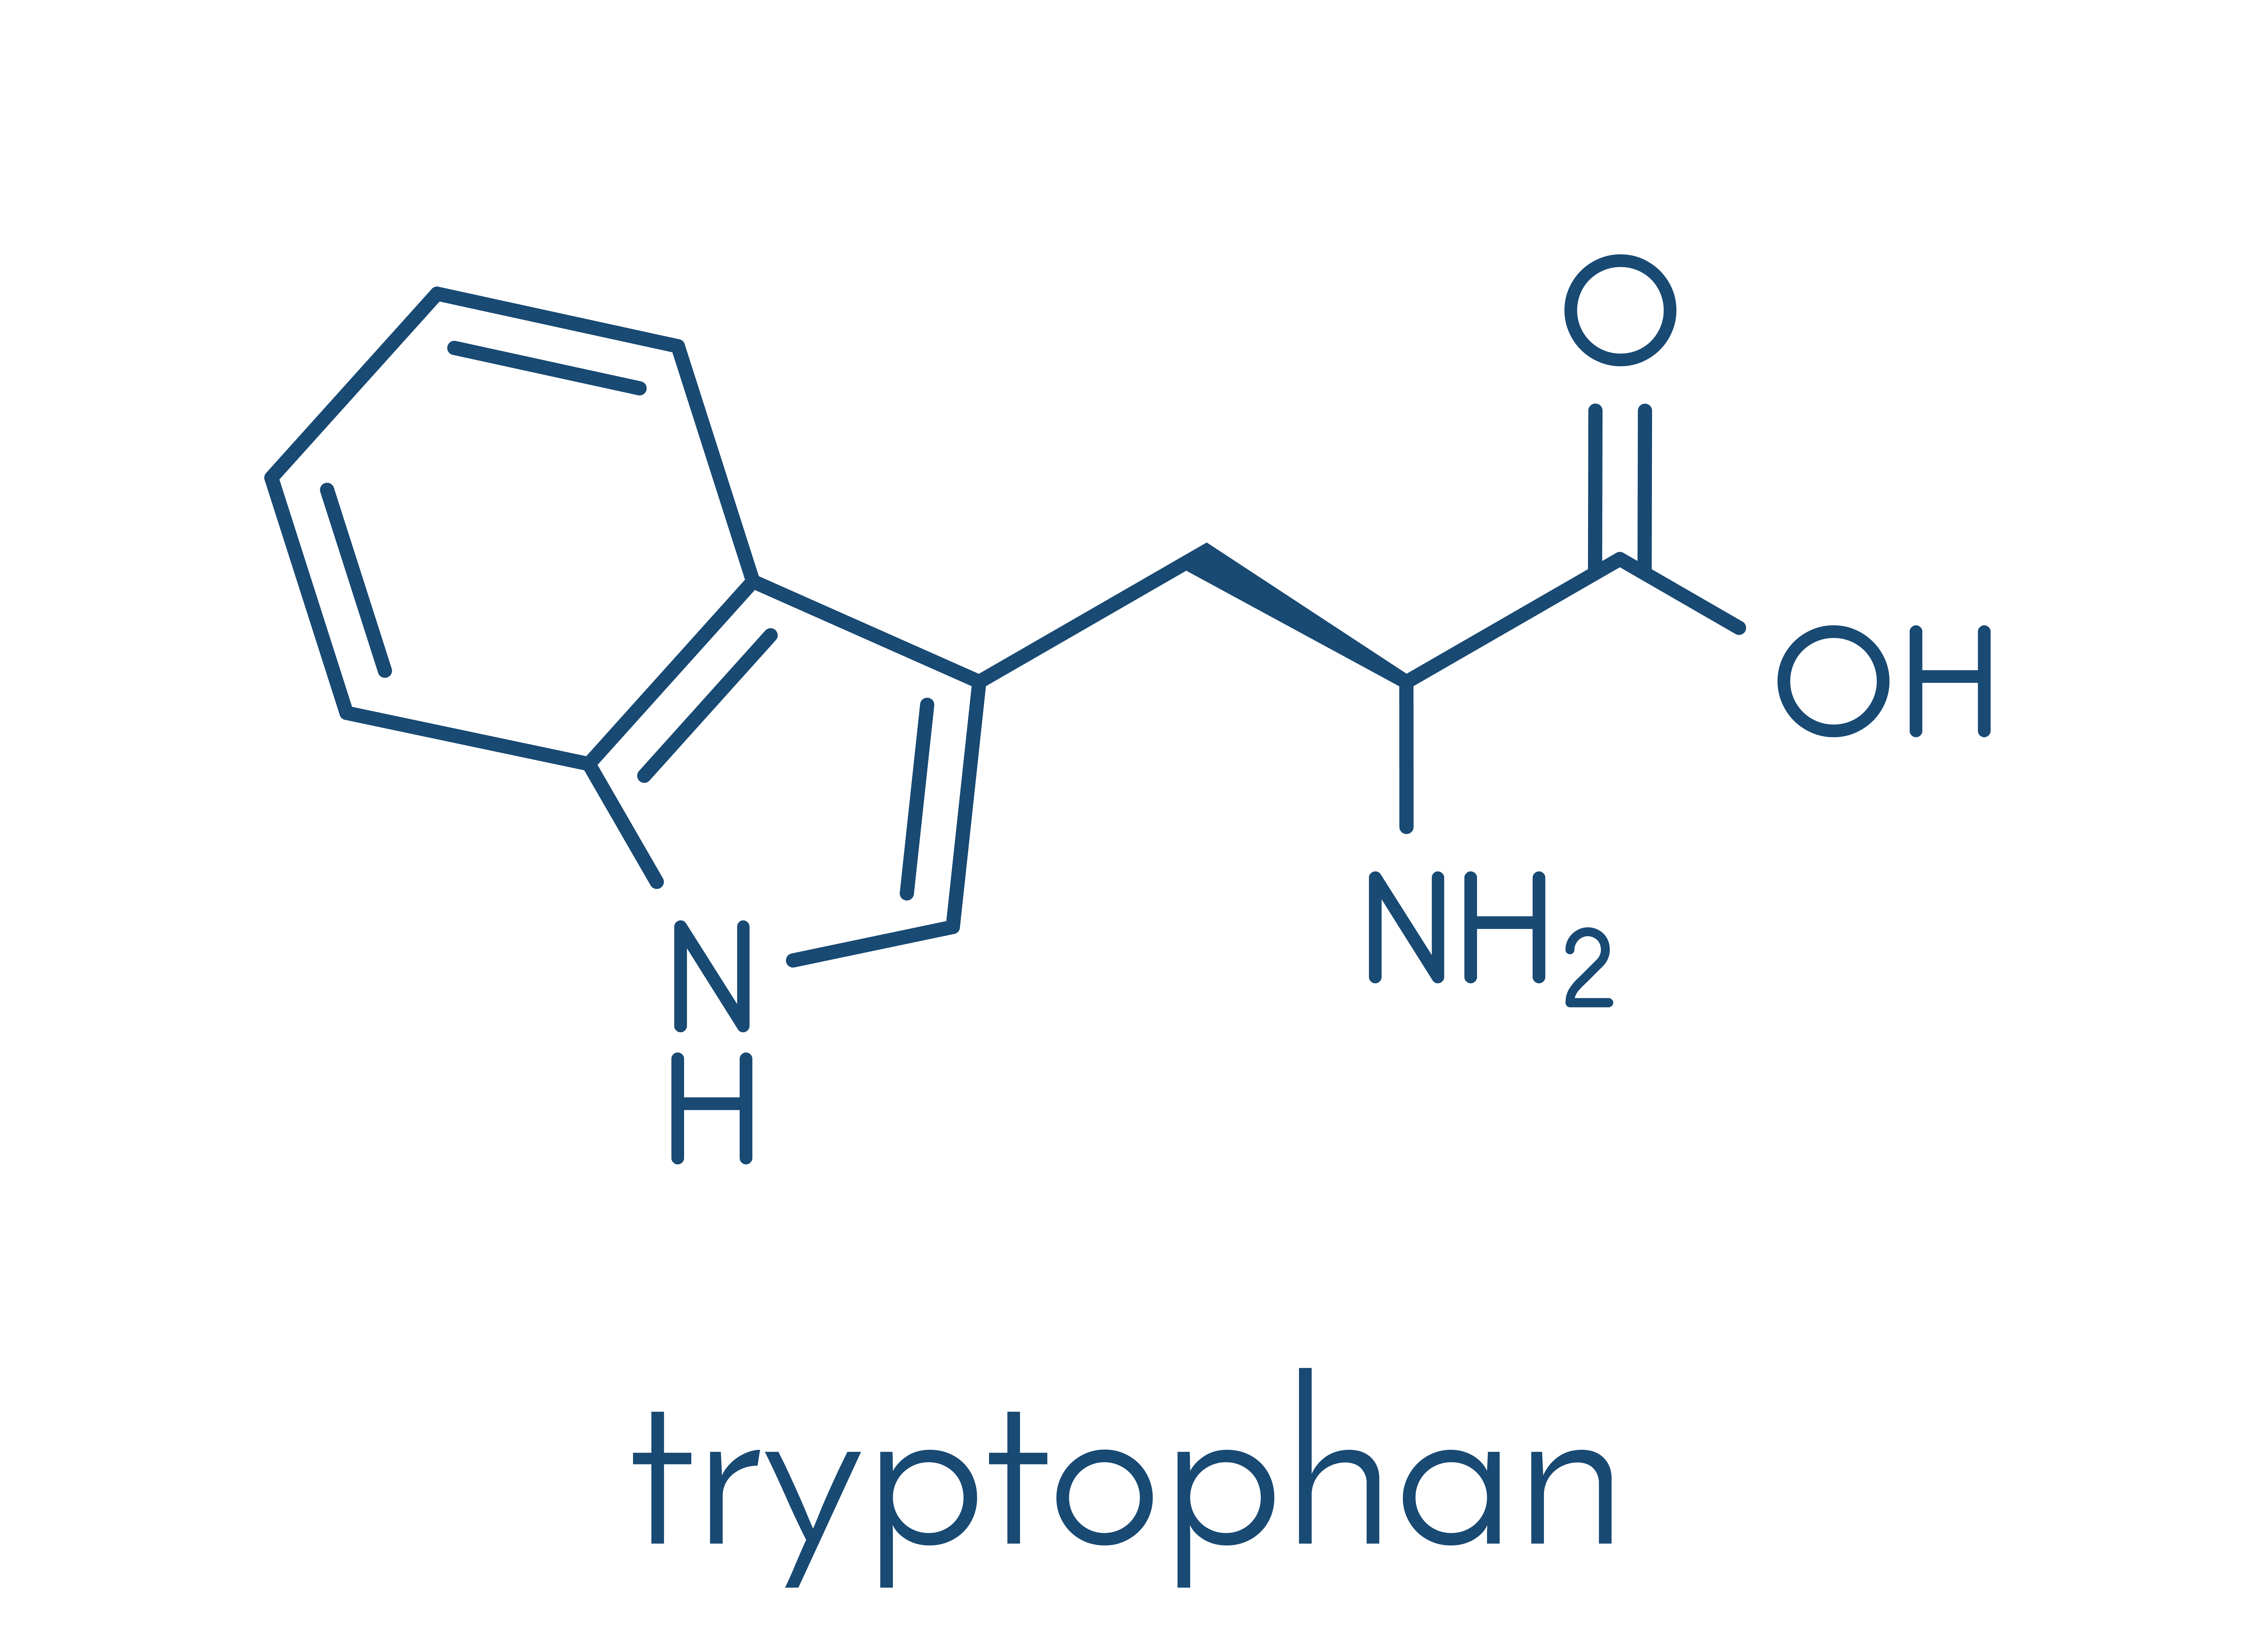 Trytophan chemical formulation